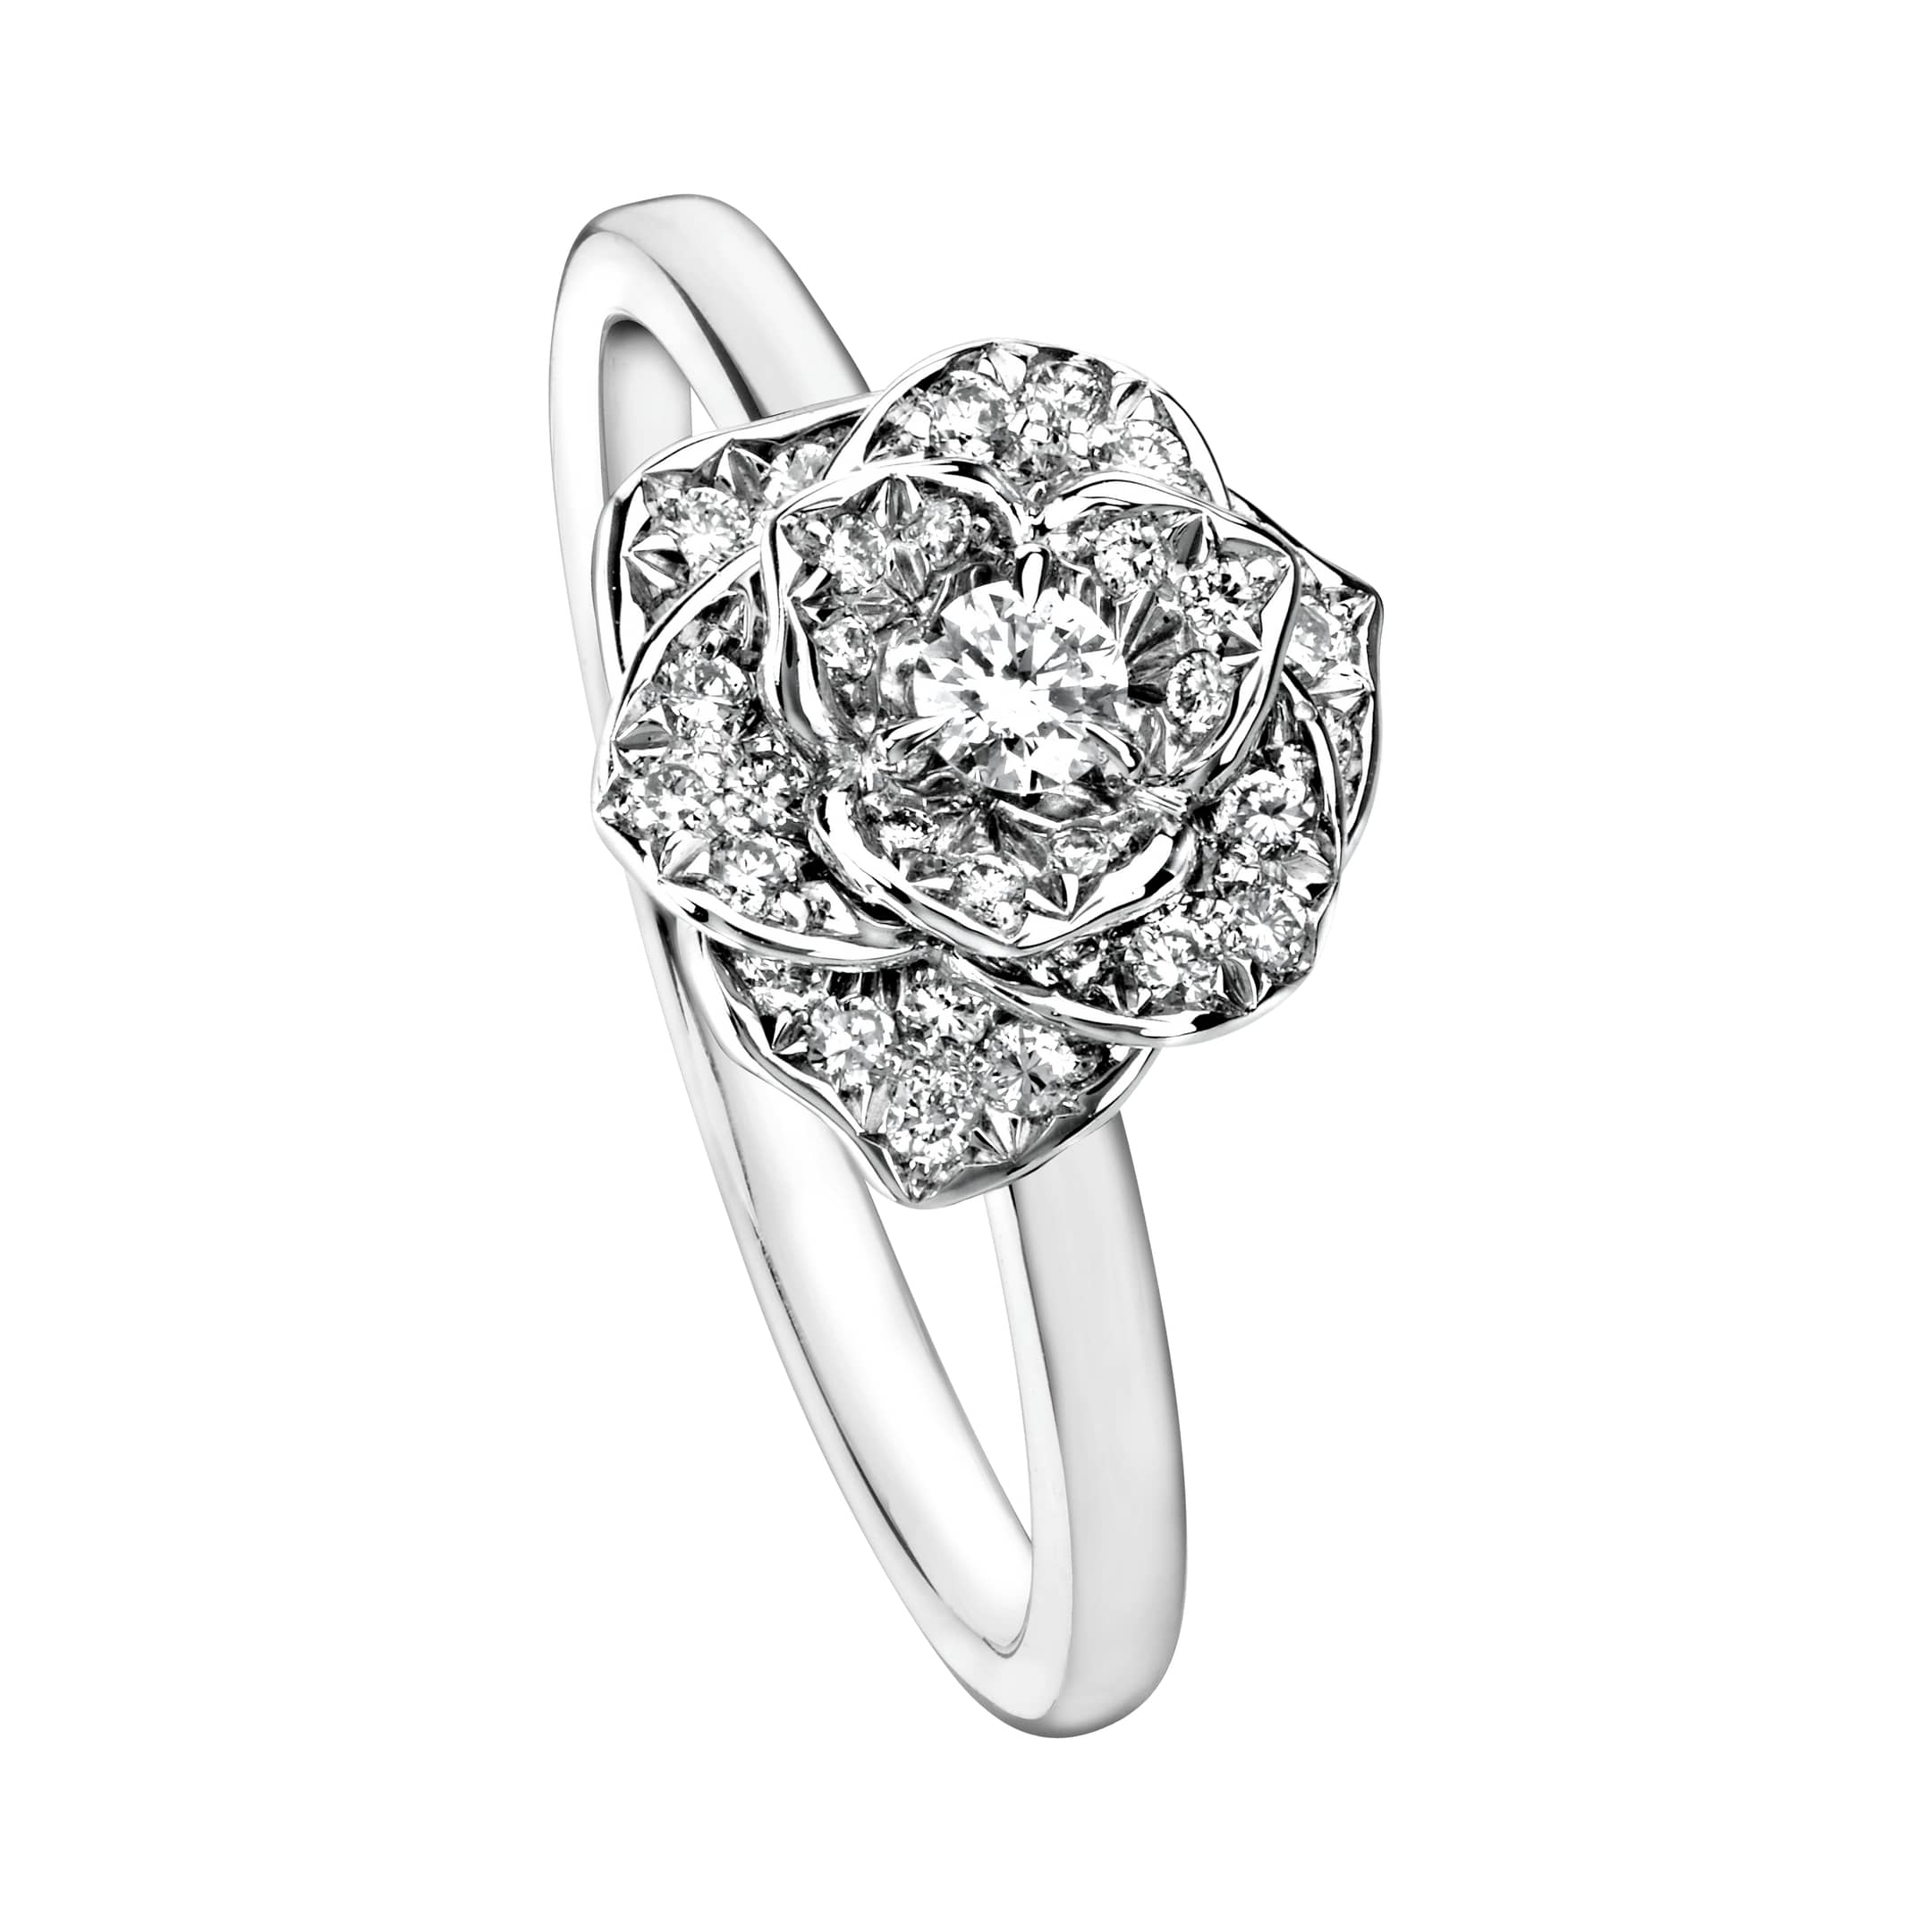 Aarde Gastvrijheid Diplomatie White gold Diamond Ring G34UR500 - Piaget Luxury Jewelry Online